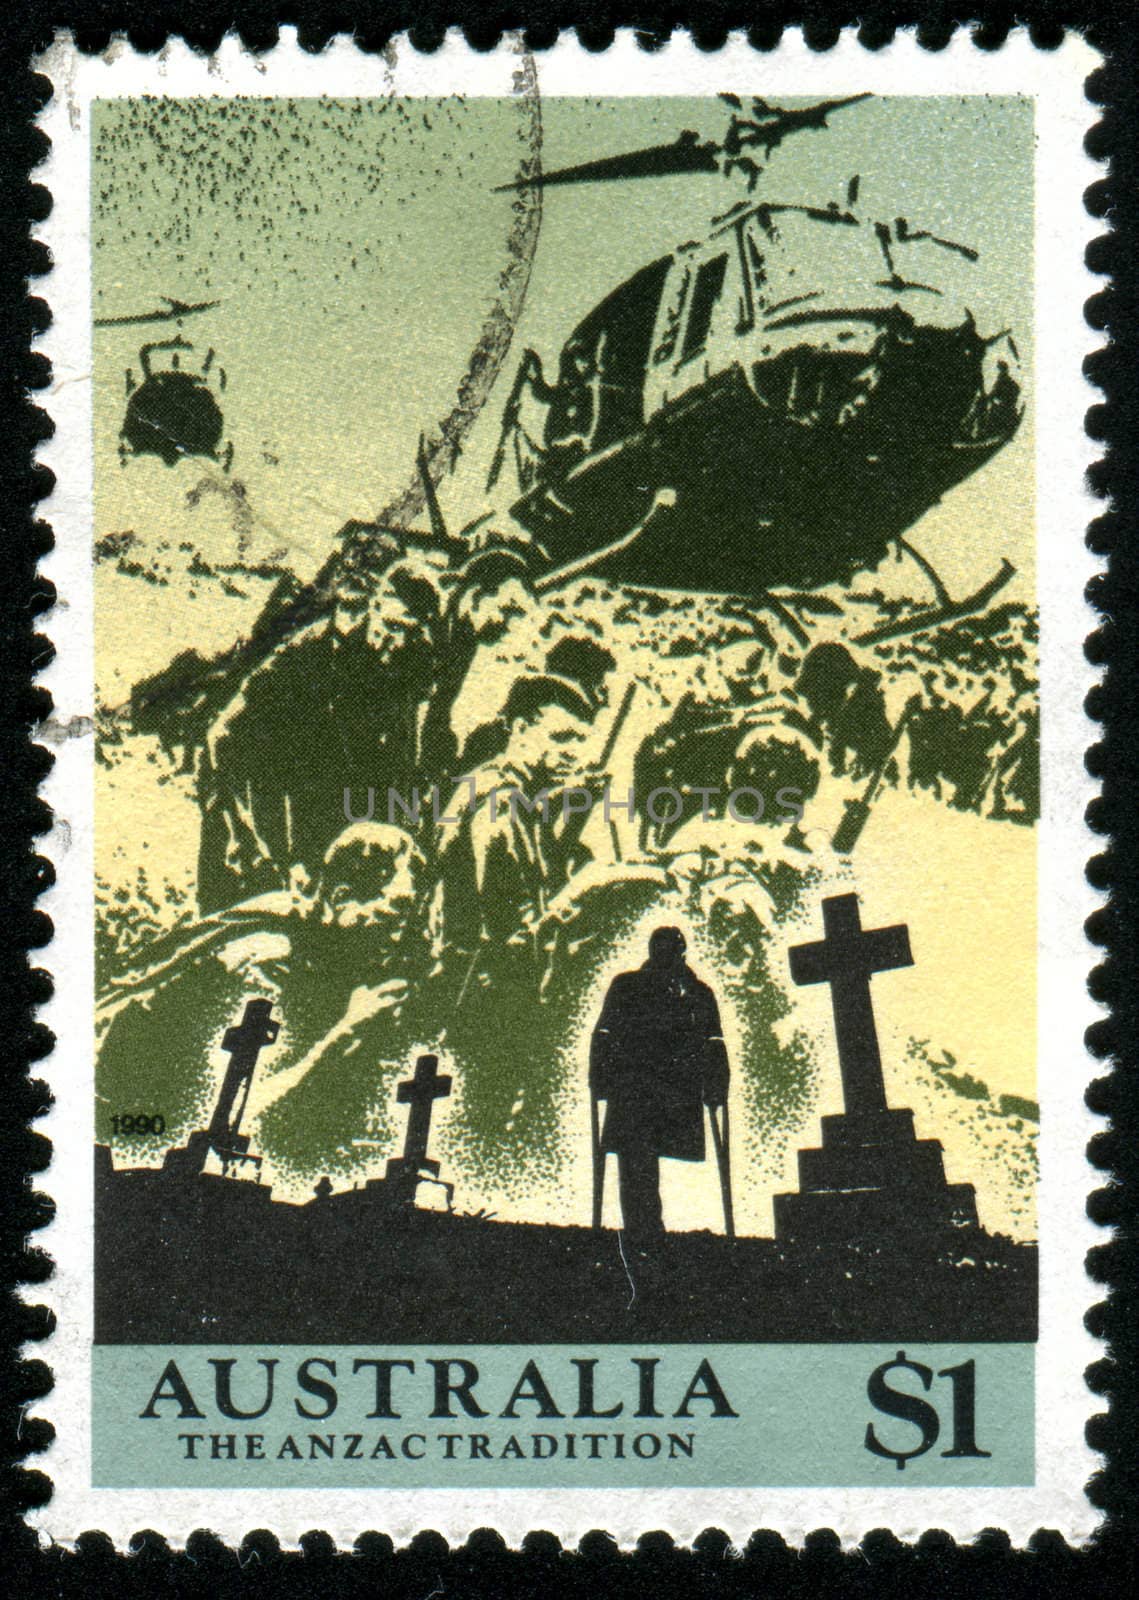 AUSTRALIA - CIRCA 1990: stamp printed by Australia, shows Anzacs at the front, circa 1990